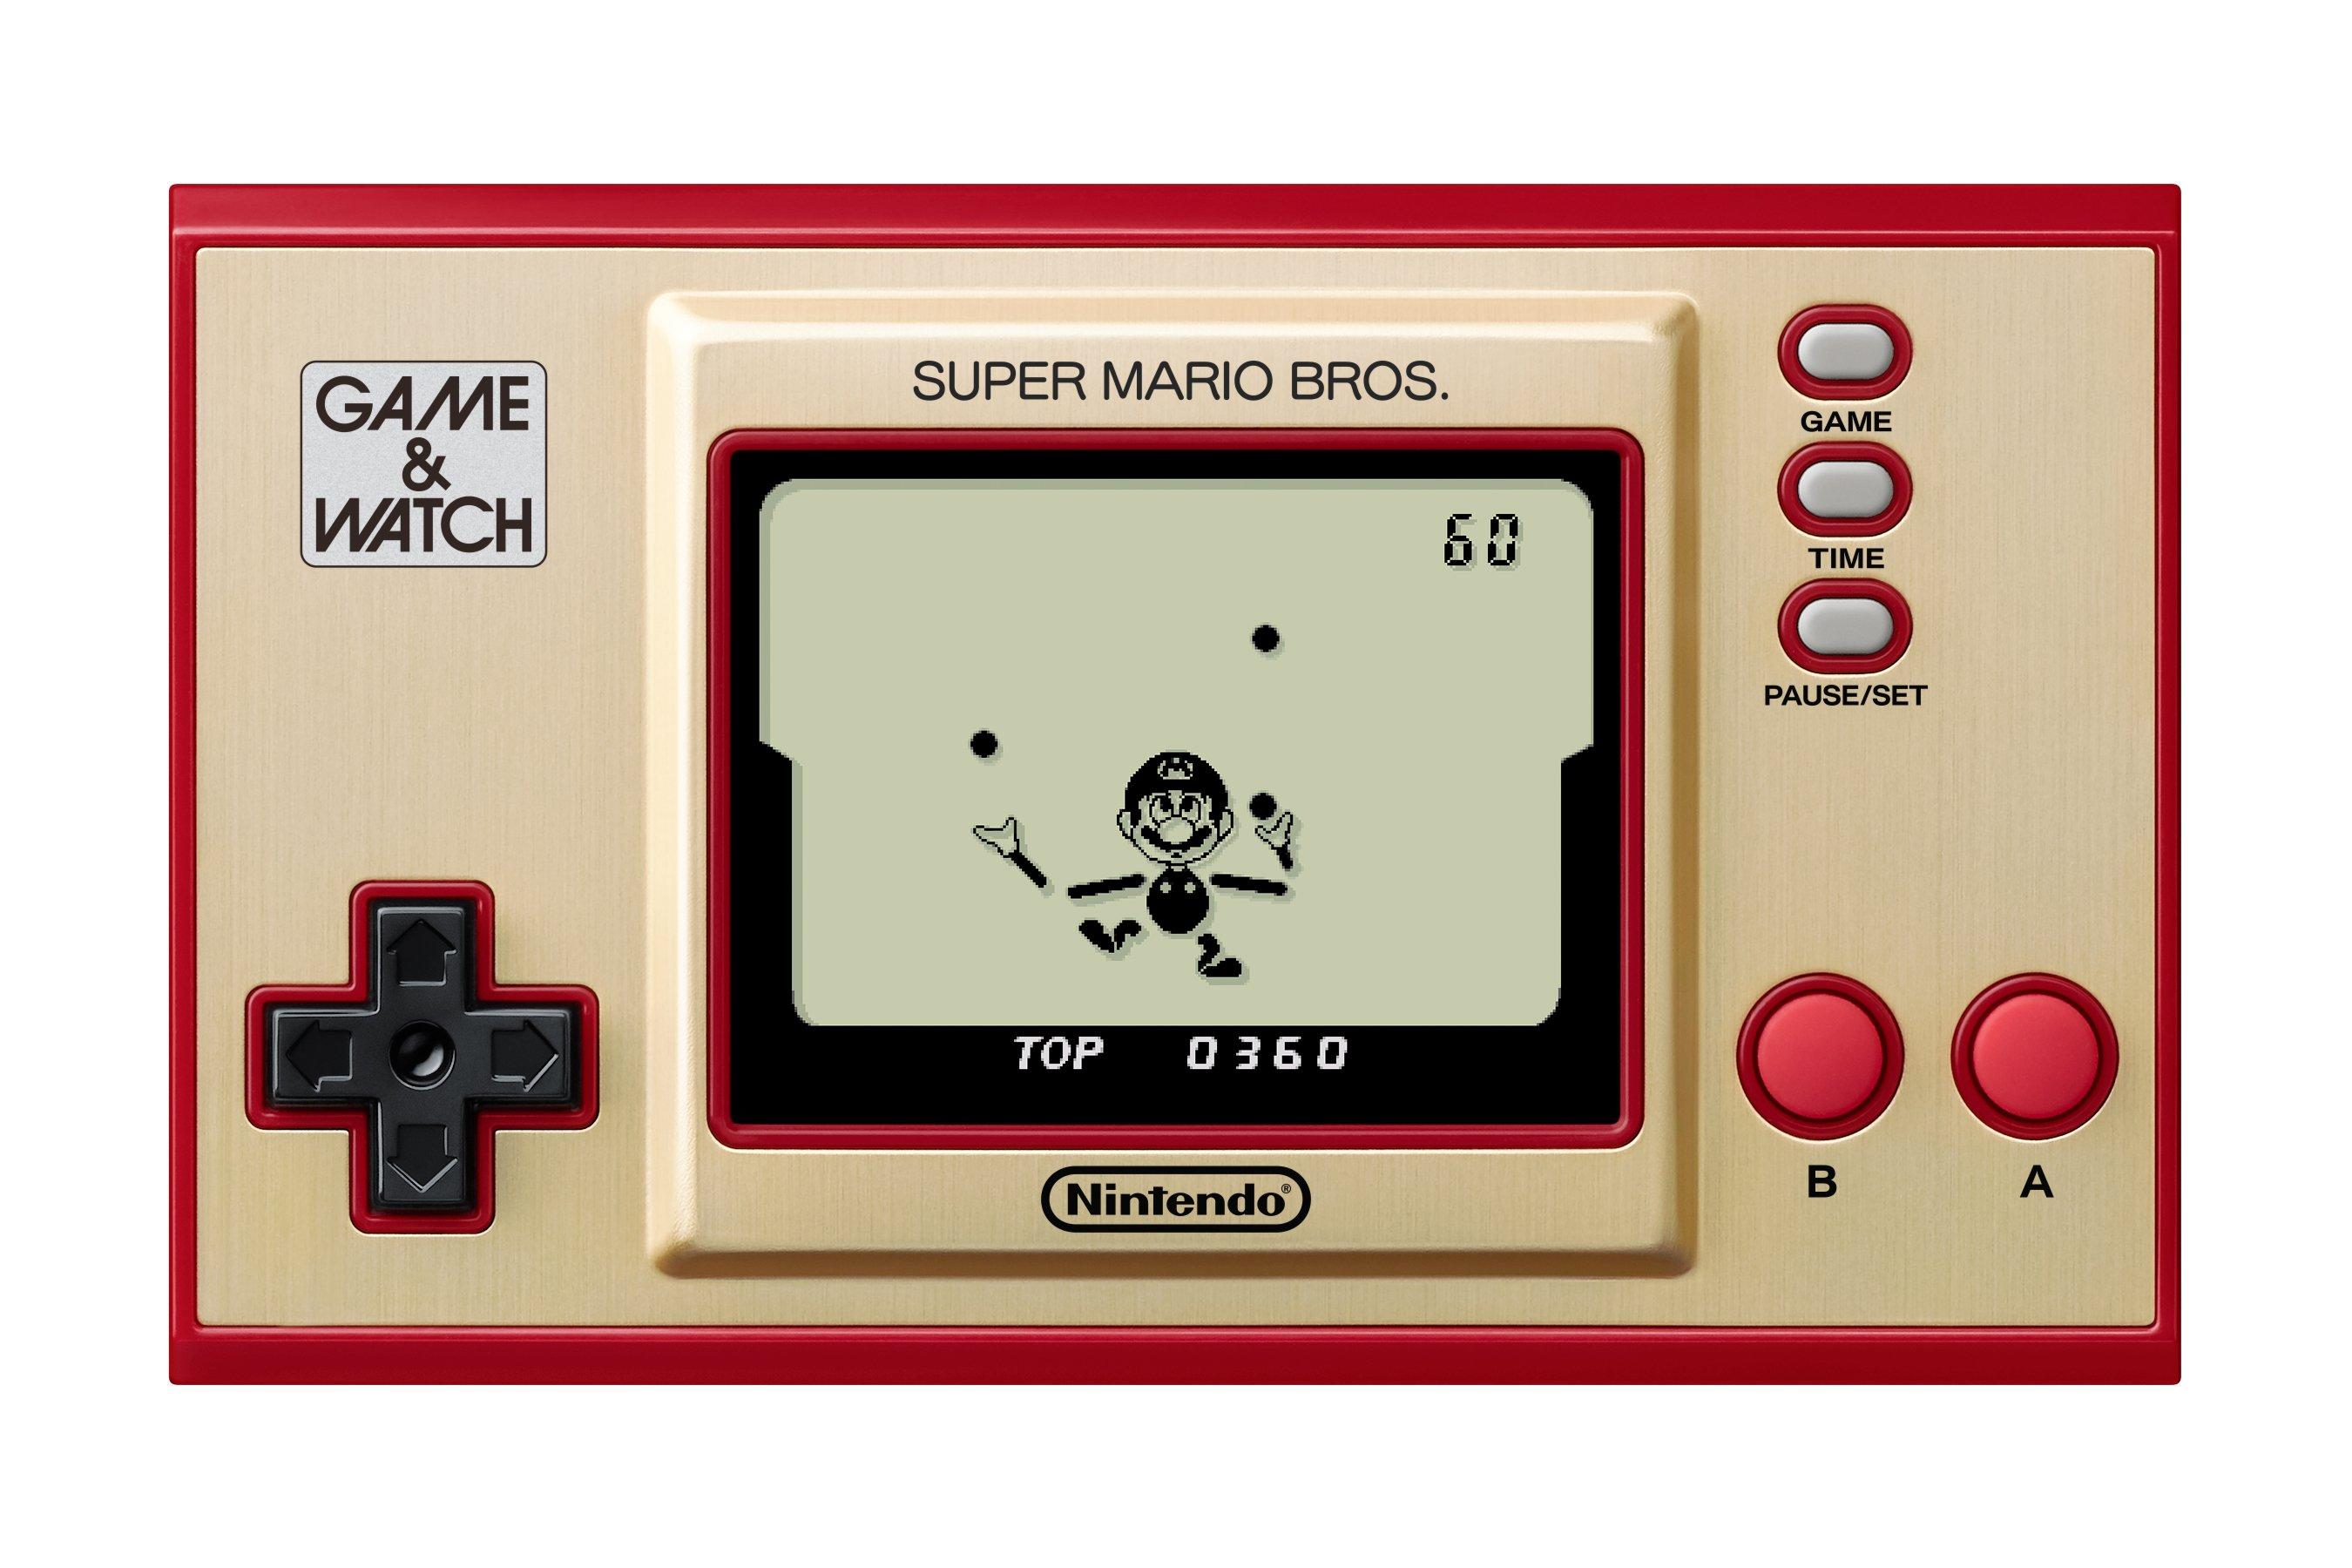 Nintendo is bringing back Game & Watch, a super-retro handheld